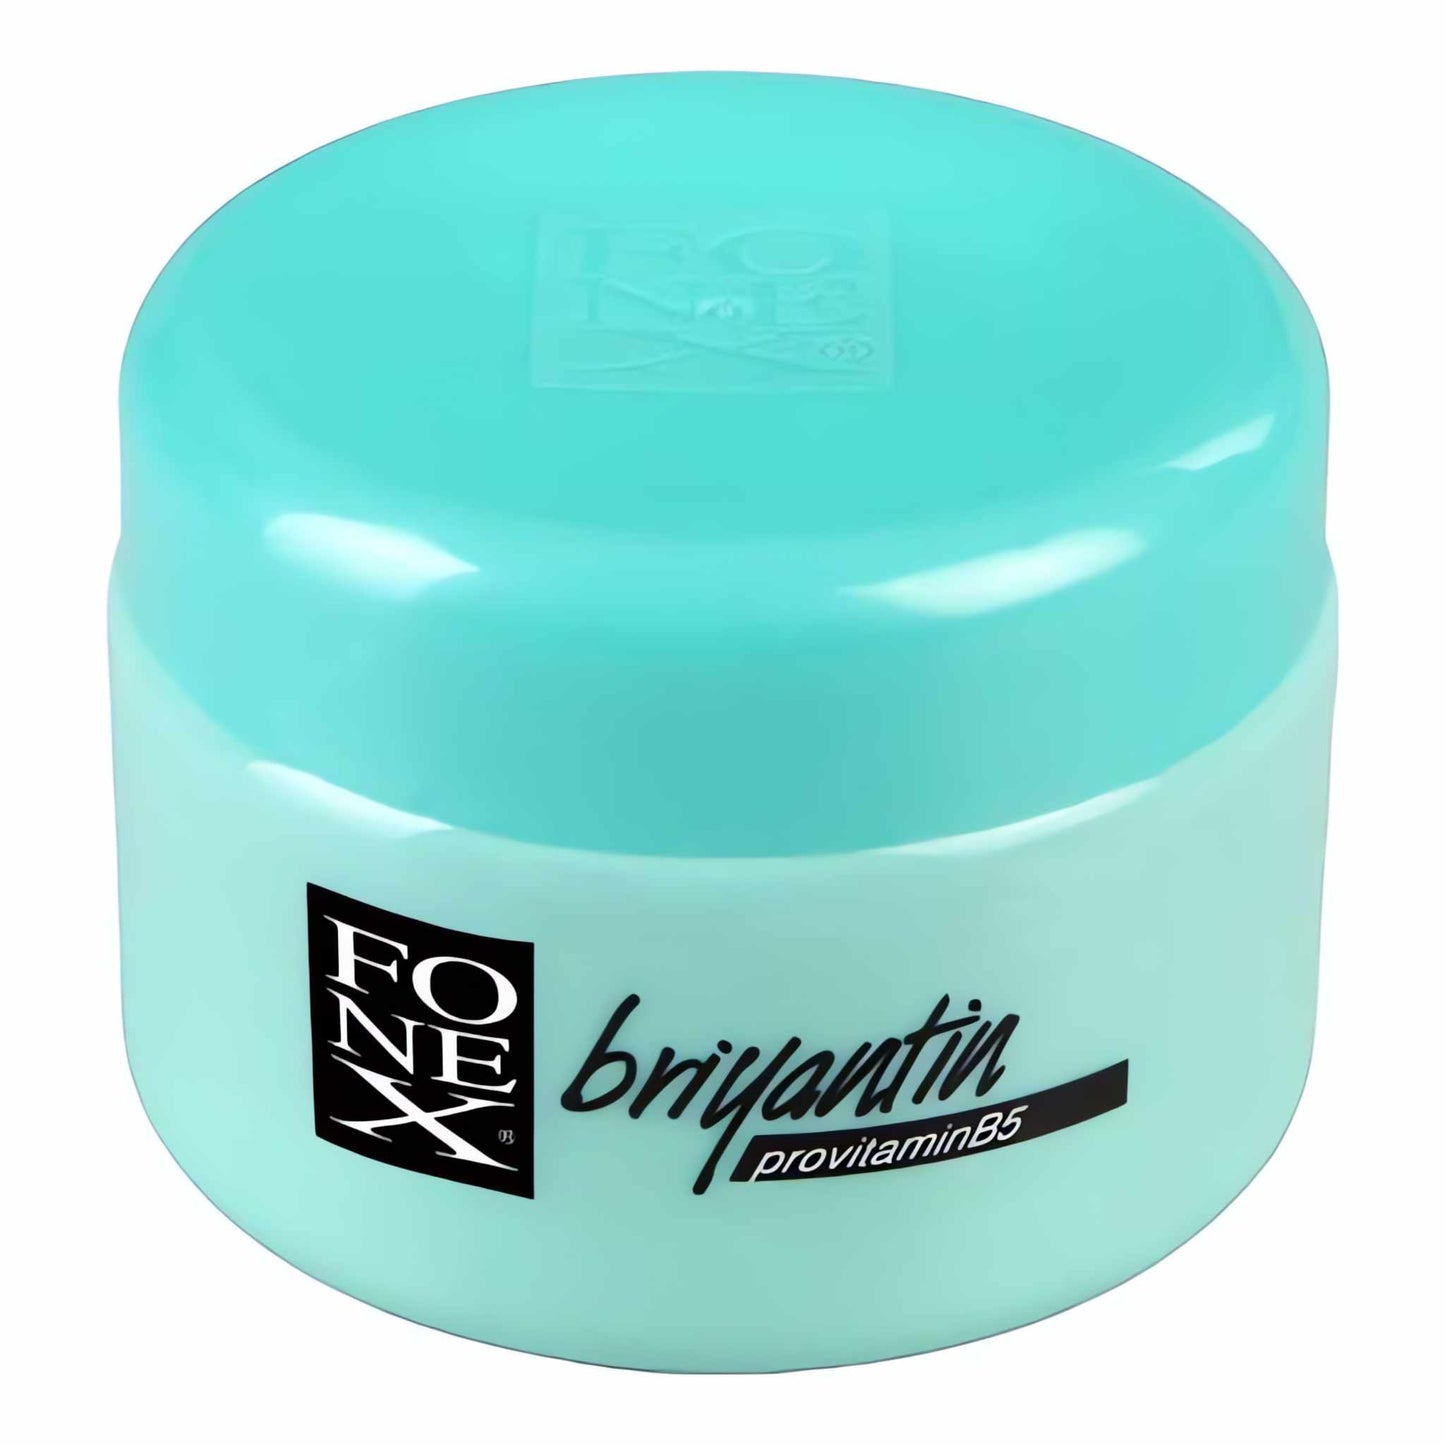 Fonex Hair Styling Cream Briyantin Provitamin B5 150 ml